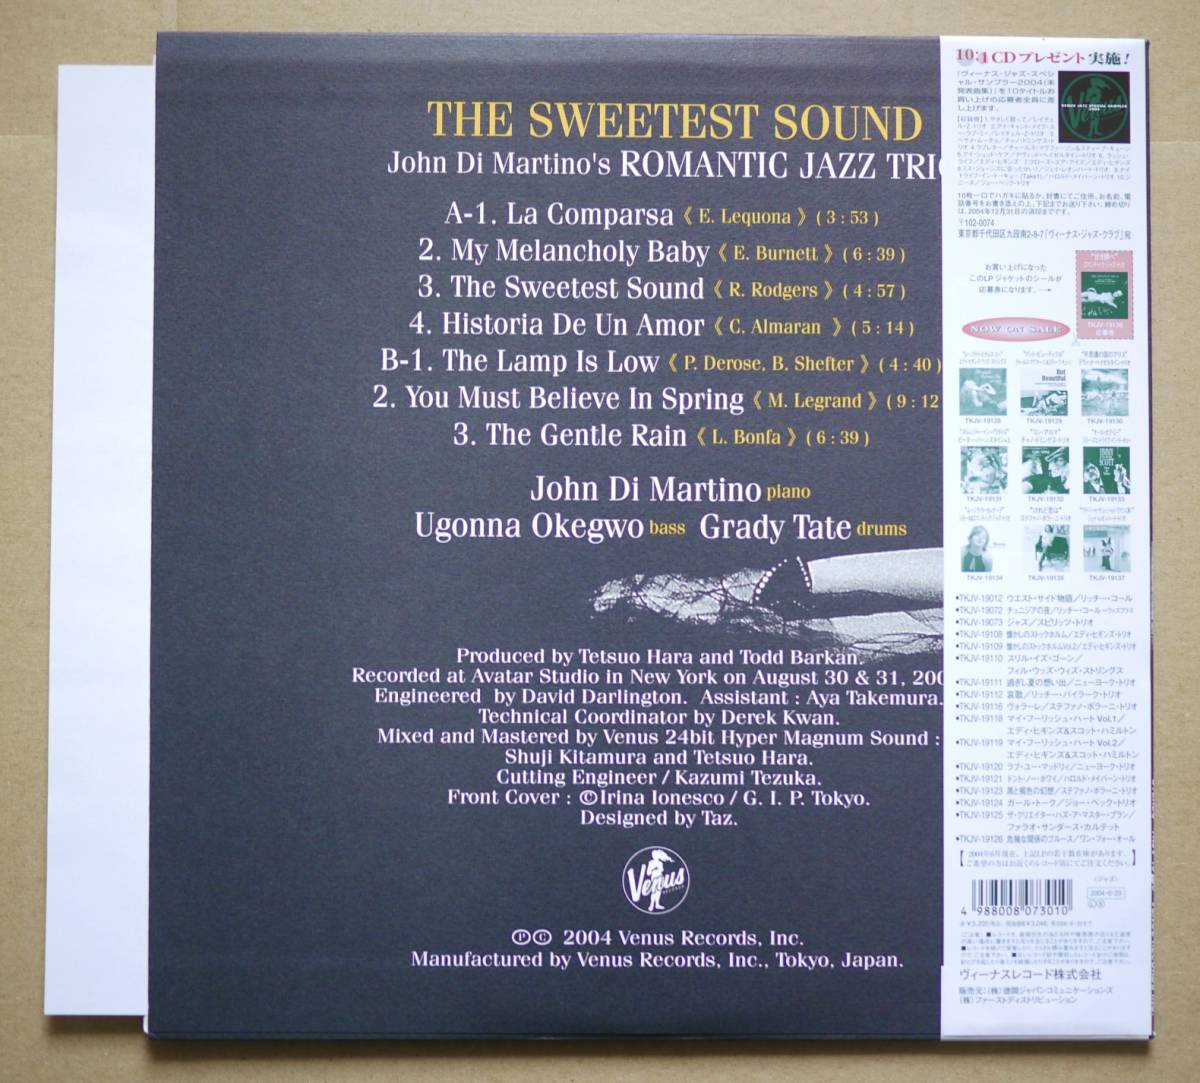 LP : 新品未使用 John Di Martino's Romantic Jazz Trio / The Sweetest Sound 帯付 Venus 180g重量盤 TKJV-19136 red vinyl_画像3